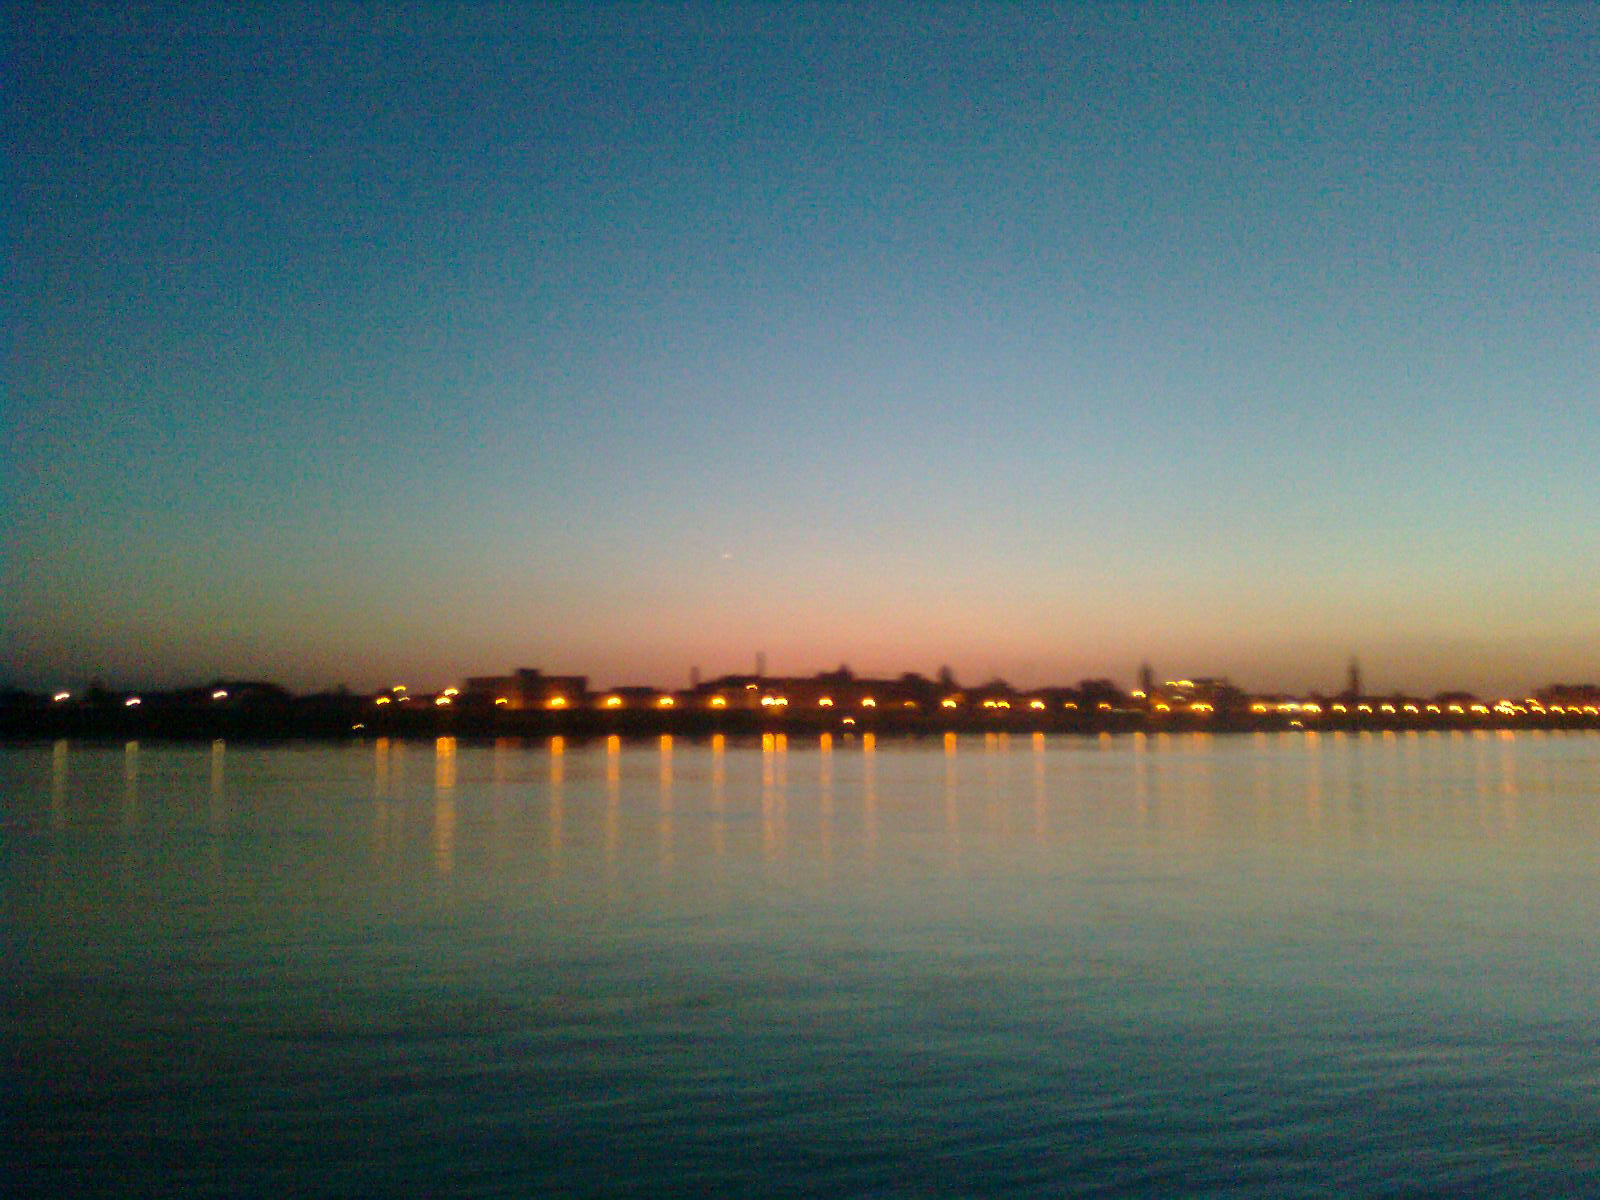 szigetben este, naplemente